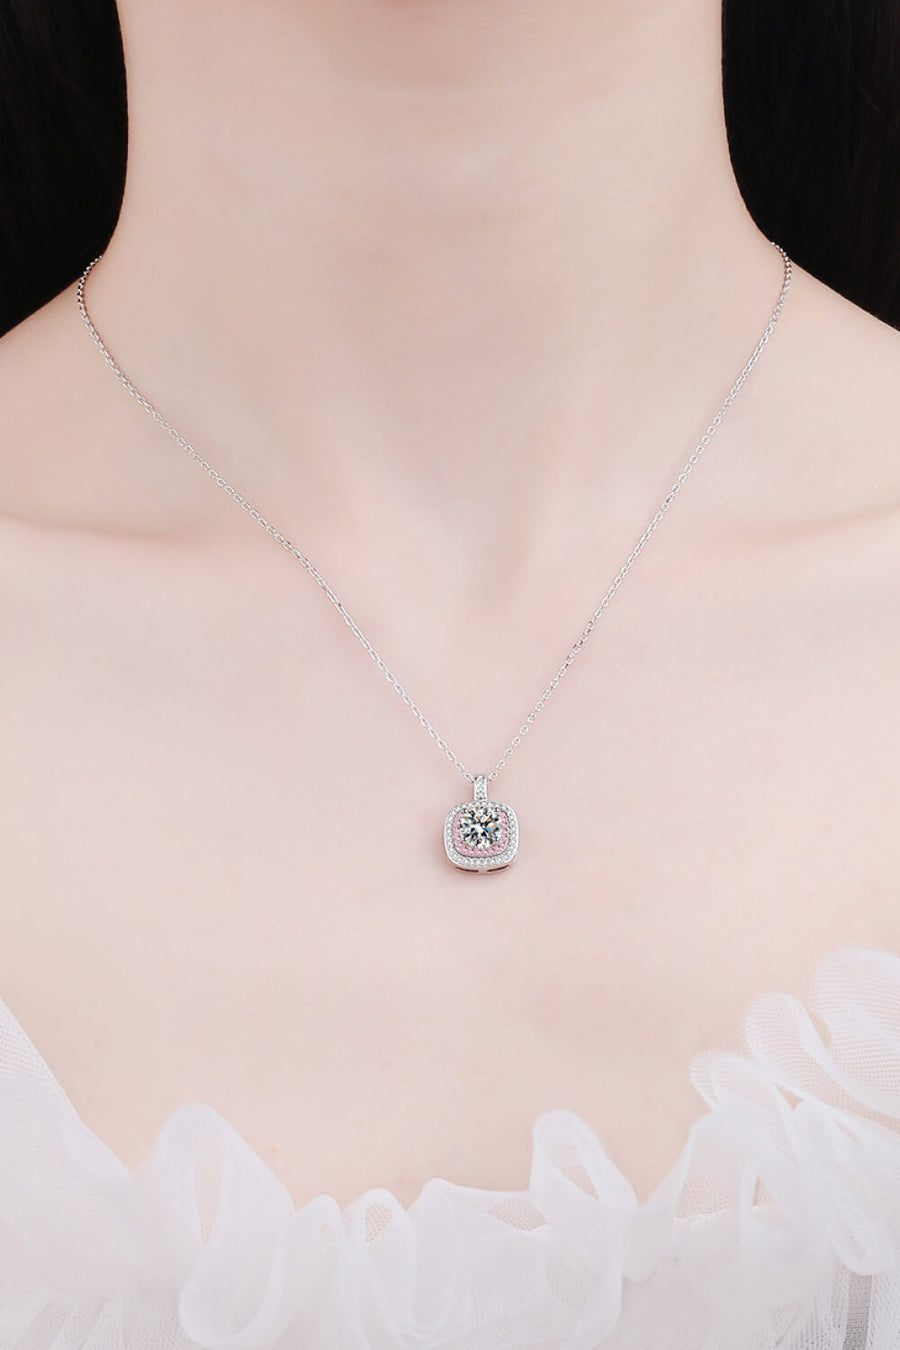 1# BEST Diamond Pendant Necklace Jewelry Gifts for Women | #1 Best Most Top Trendy Trending 1 Carat Diamond Geometric Pendant Necklace Gift for Women, Ladies | MASON New York